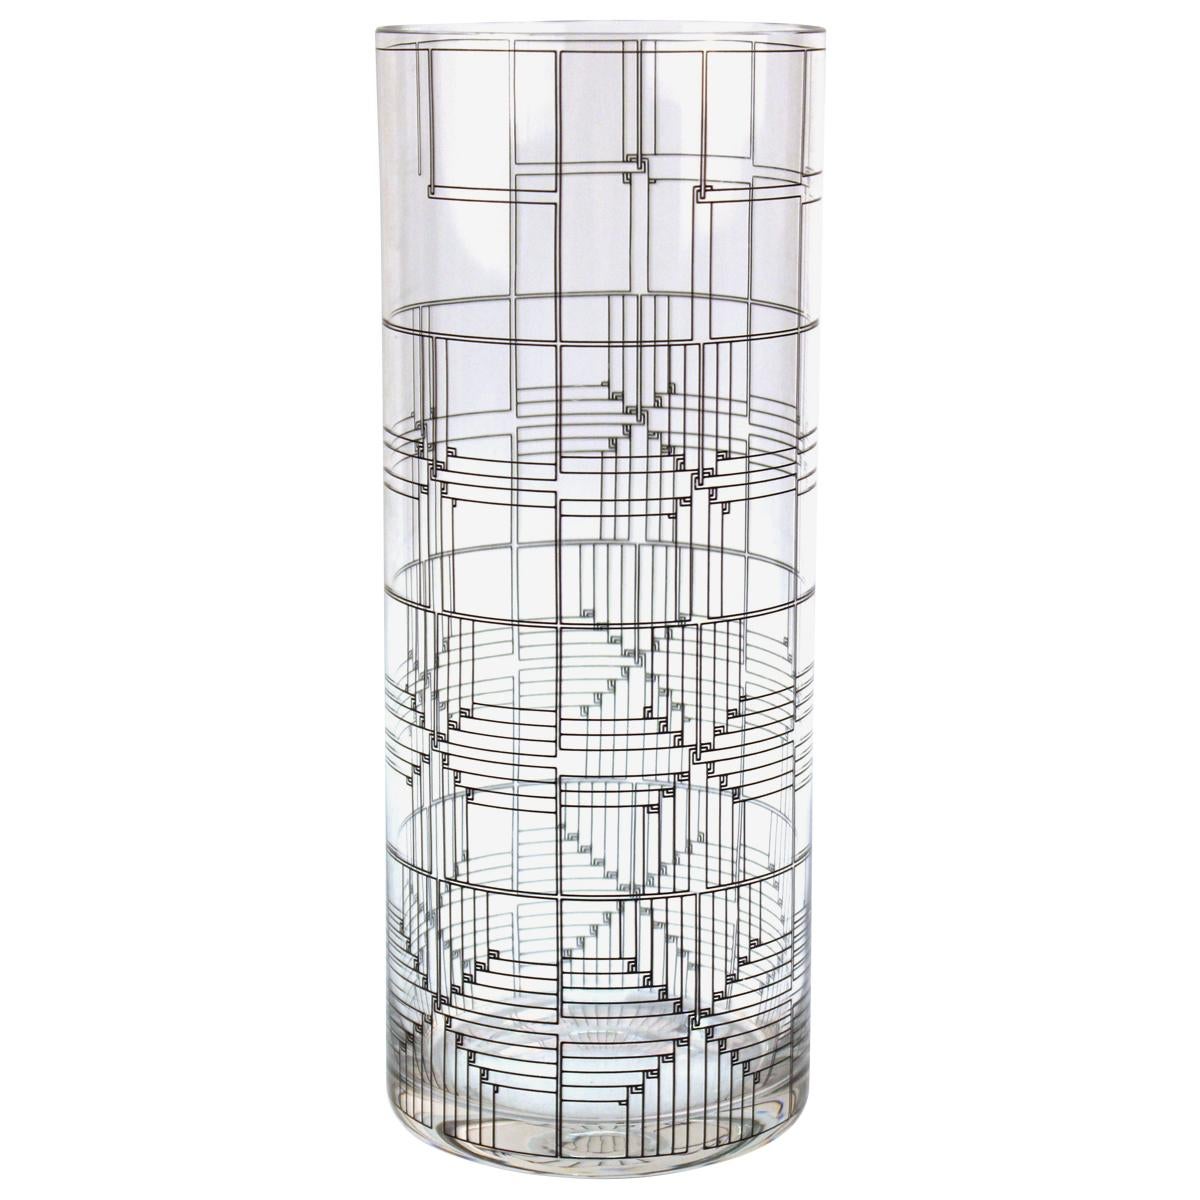 Marcello Morandini for Rosenthal Modern Glass Vase with Graphic Design